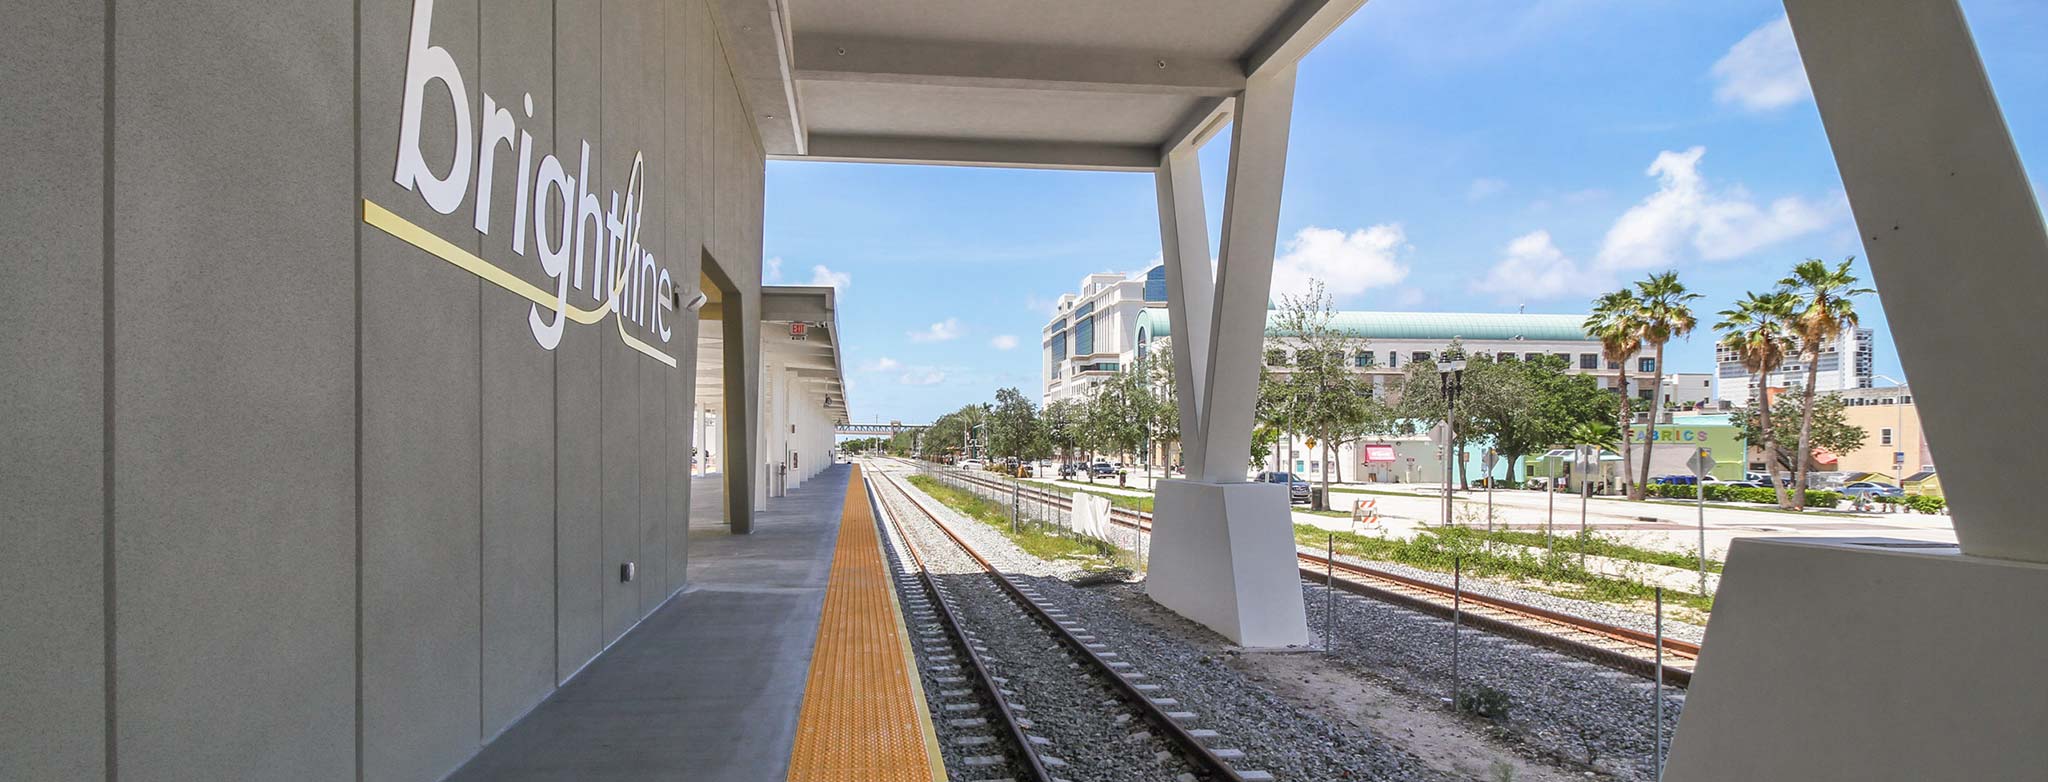 Brightline Station West Palm Beach